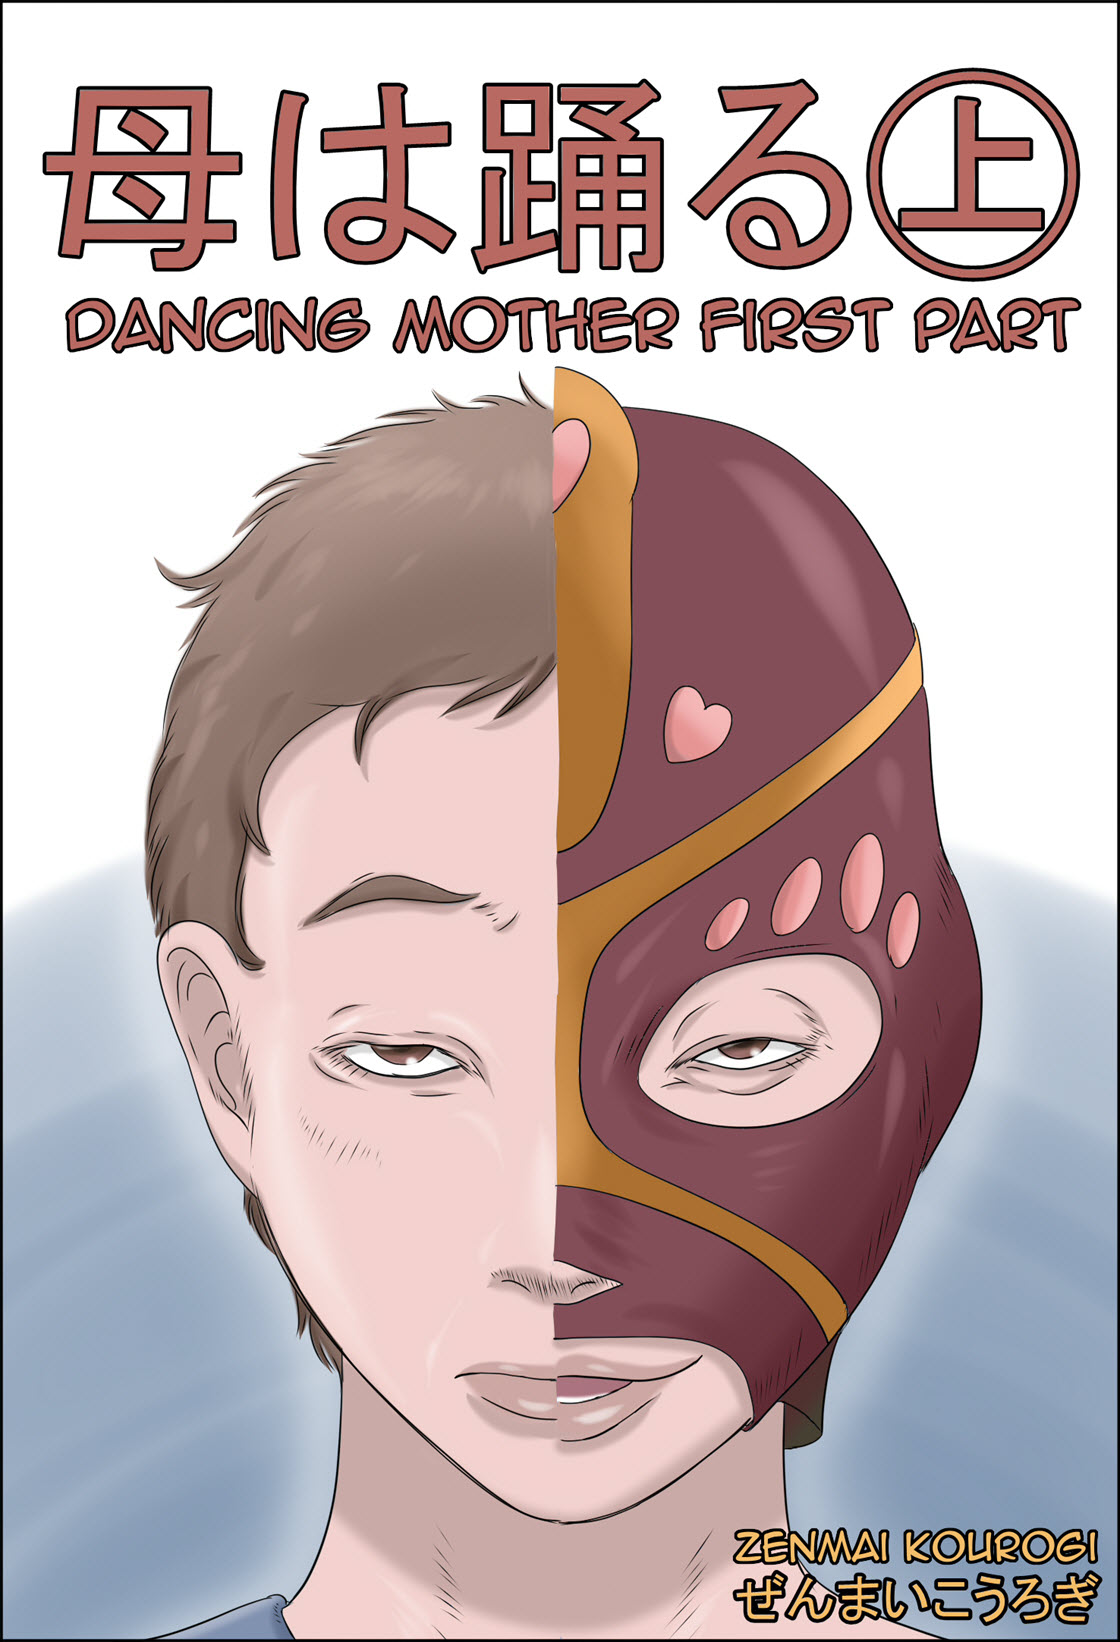 [Zenmai Kourogi] Dancing Mother Vol.1 Part 1 Hentai Comics